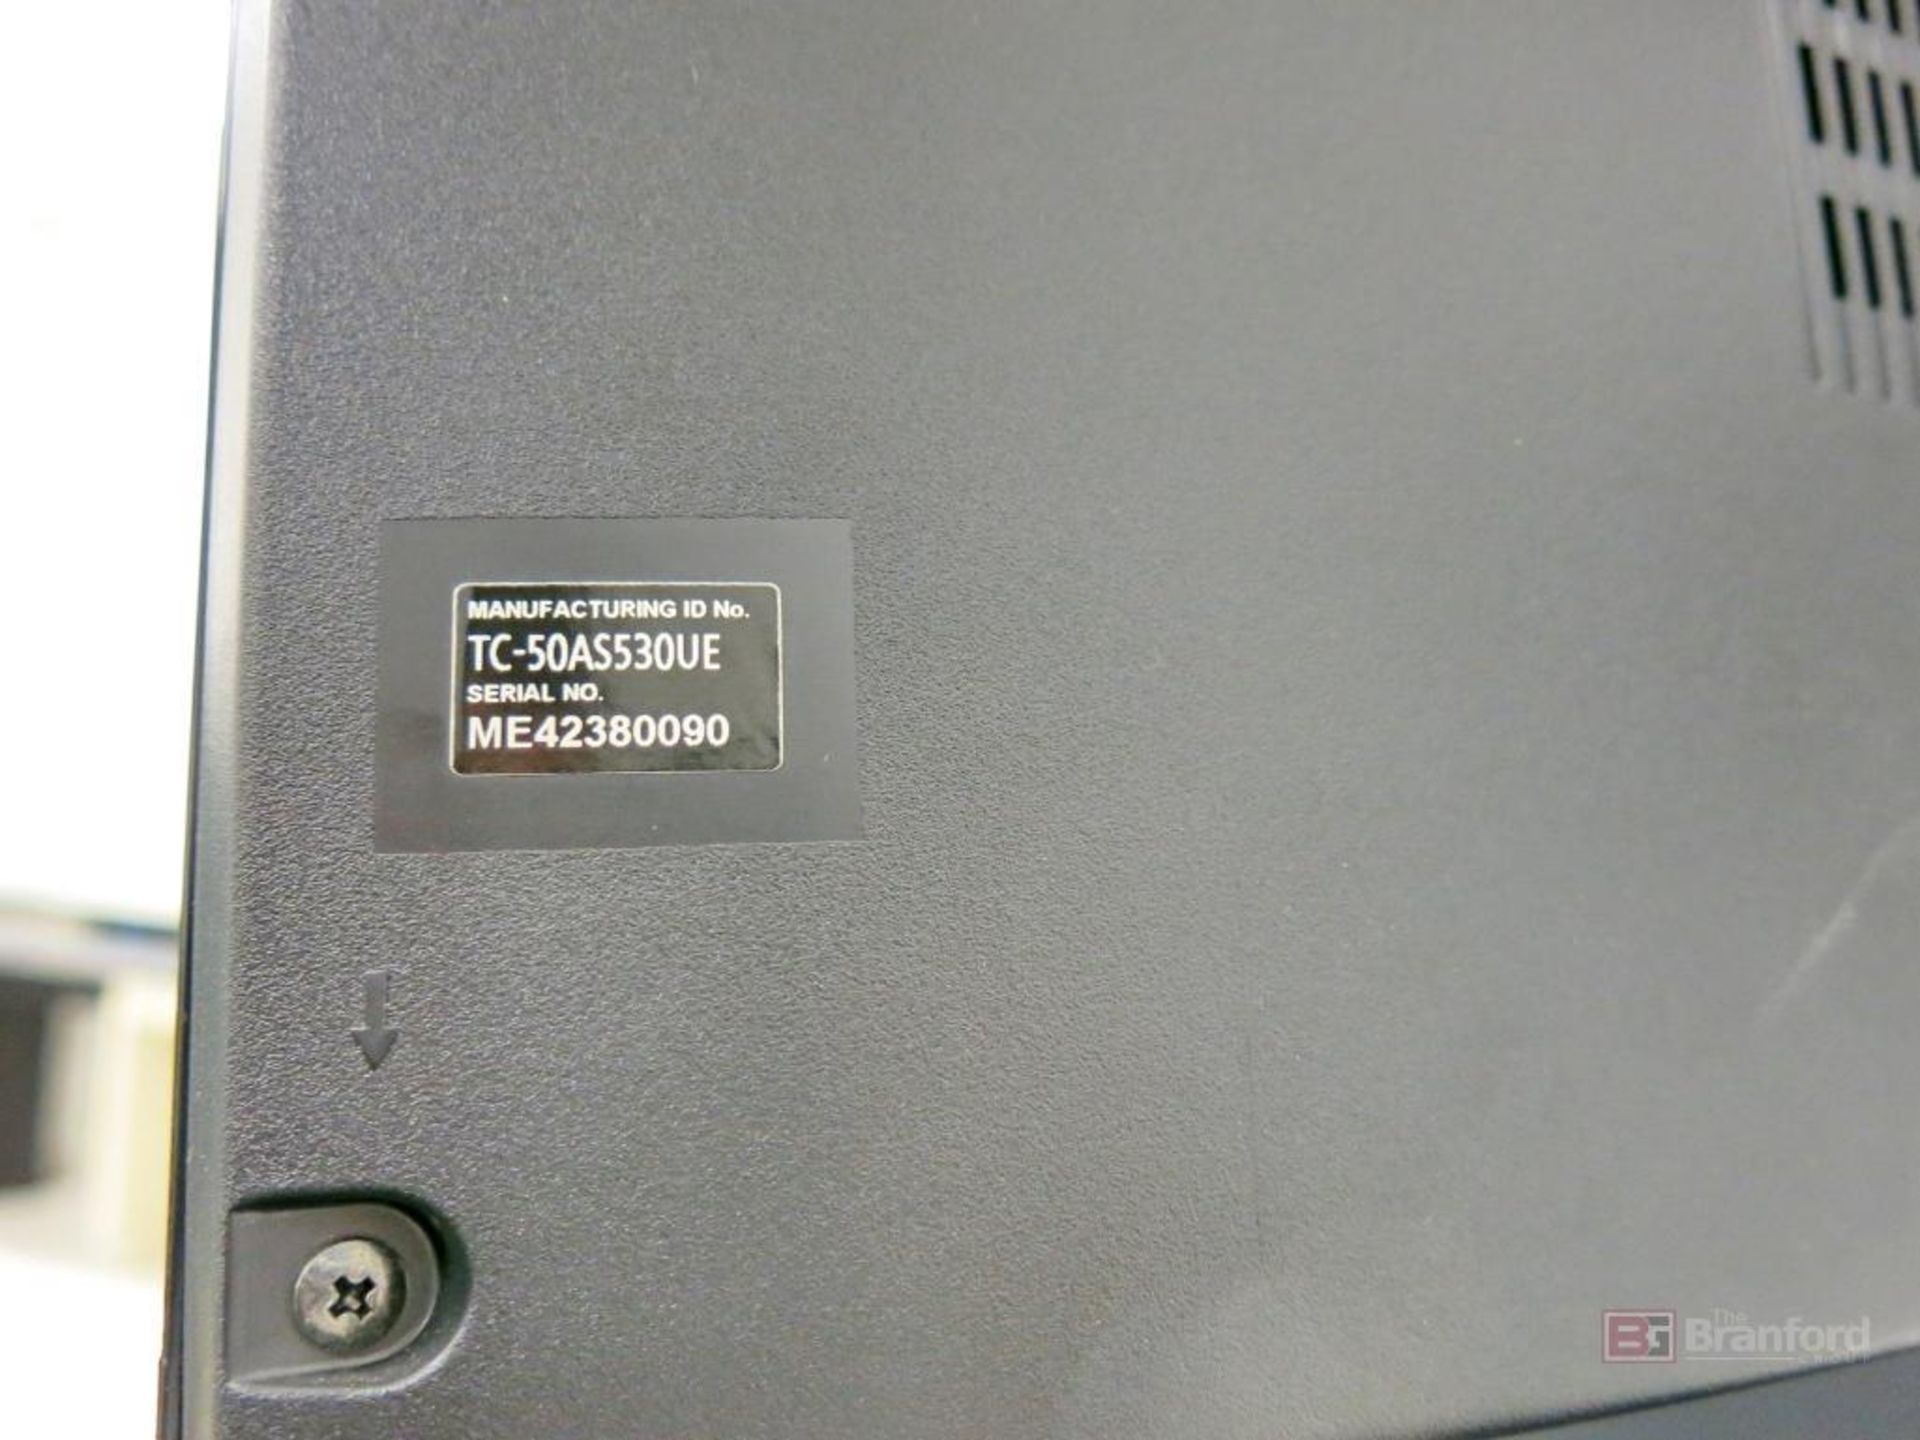 Panasonic Model TC-50AS530UE Approx. 42" Flat Panel Monitor - Image 2 of 3